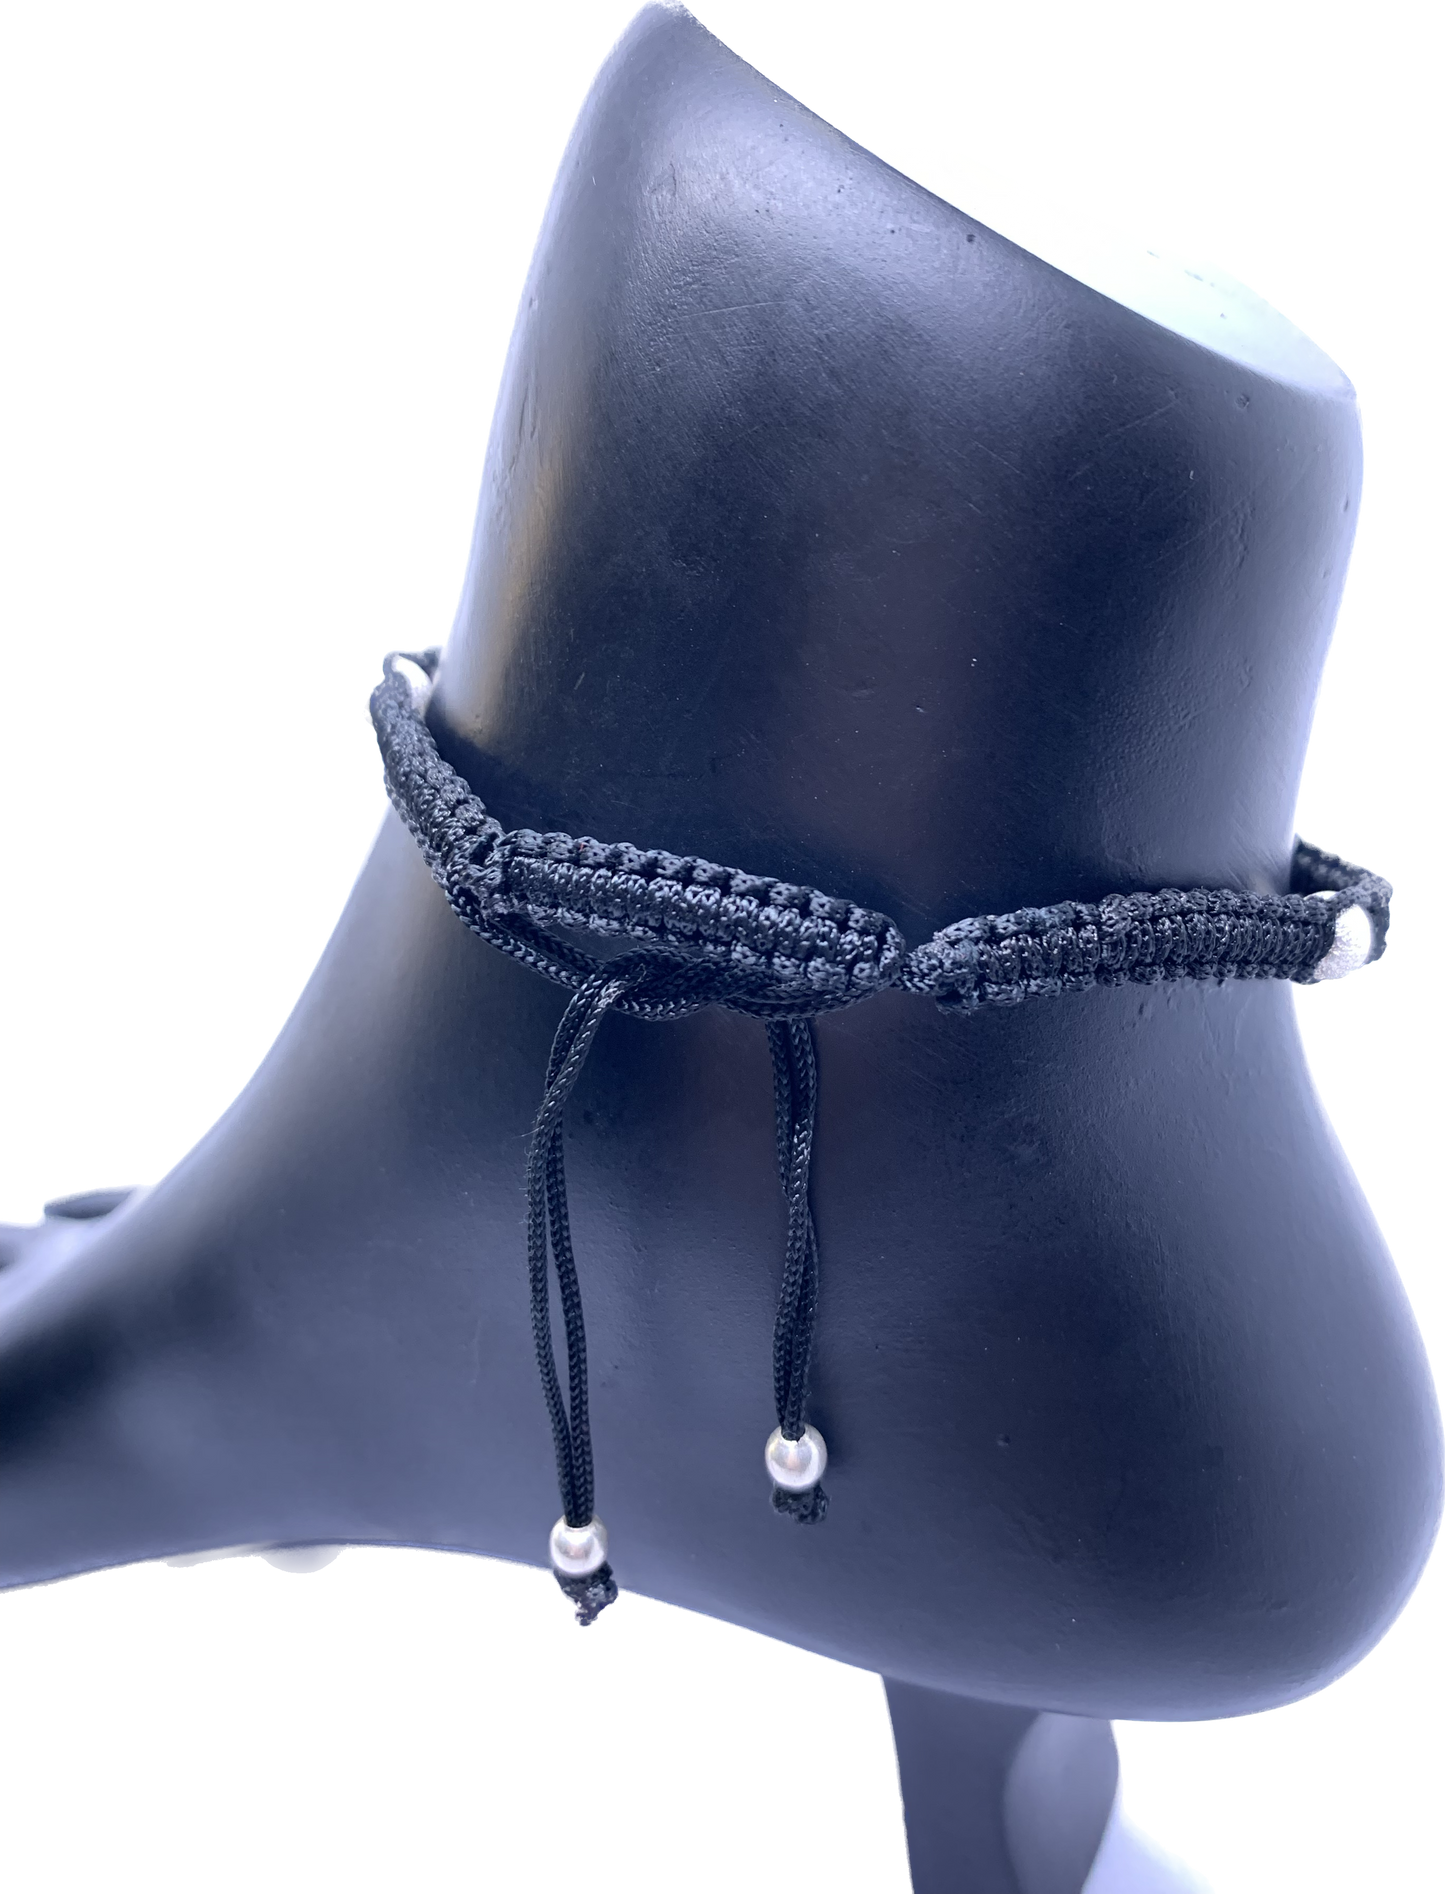 Black Tread Silver Anklet Adjustable - Silver Jewelery 925